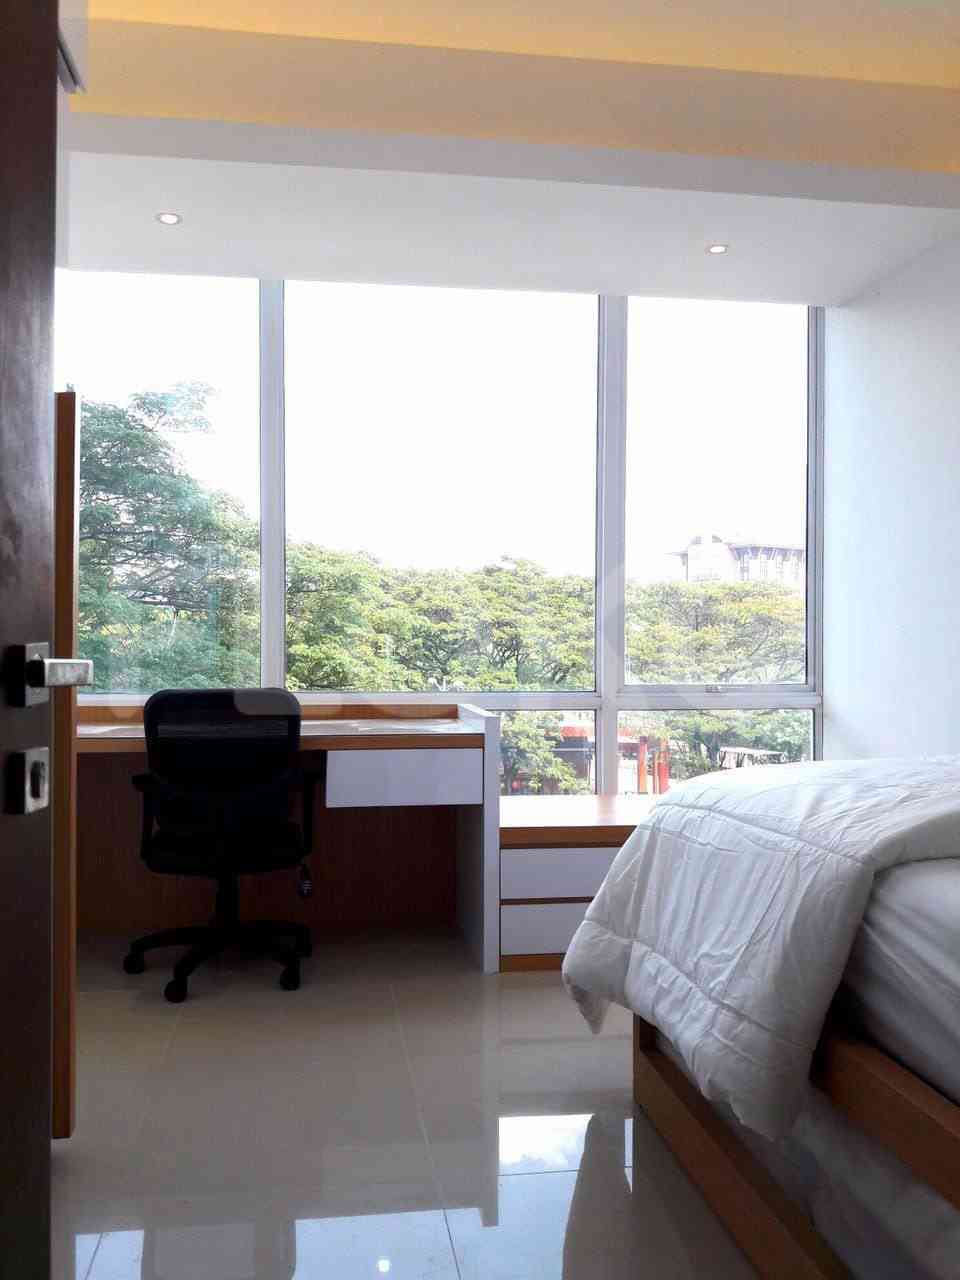 2 Bedroom on 2nd Floor for Rent in U Residence - fkab7c 2